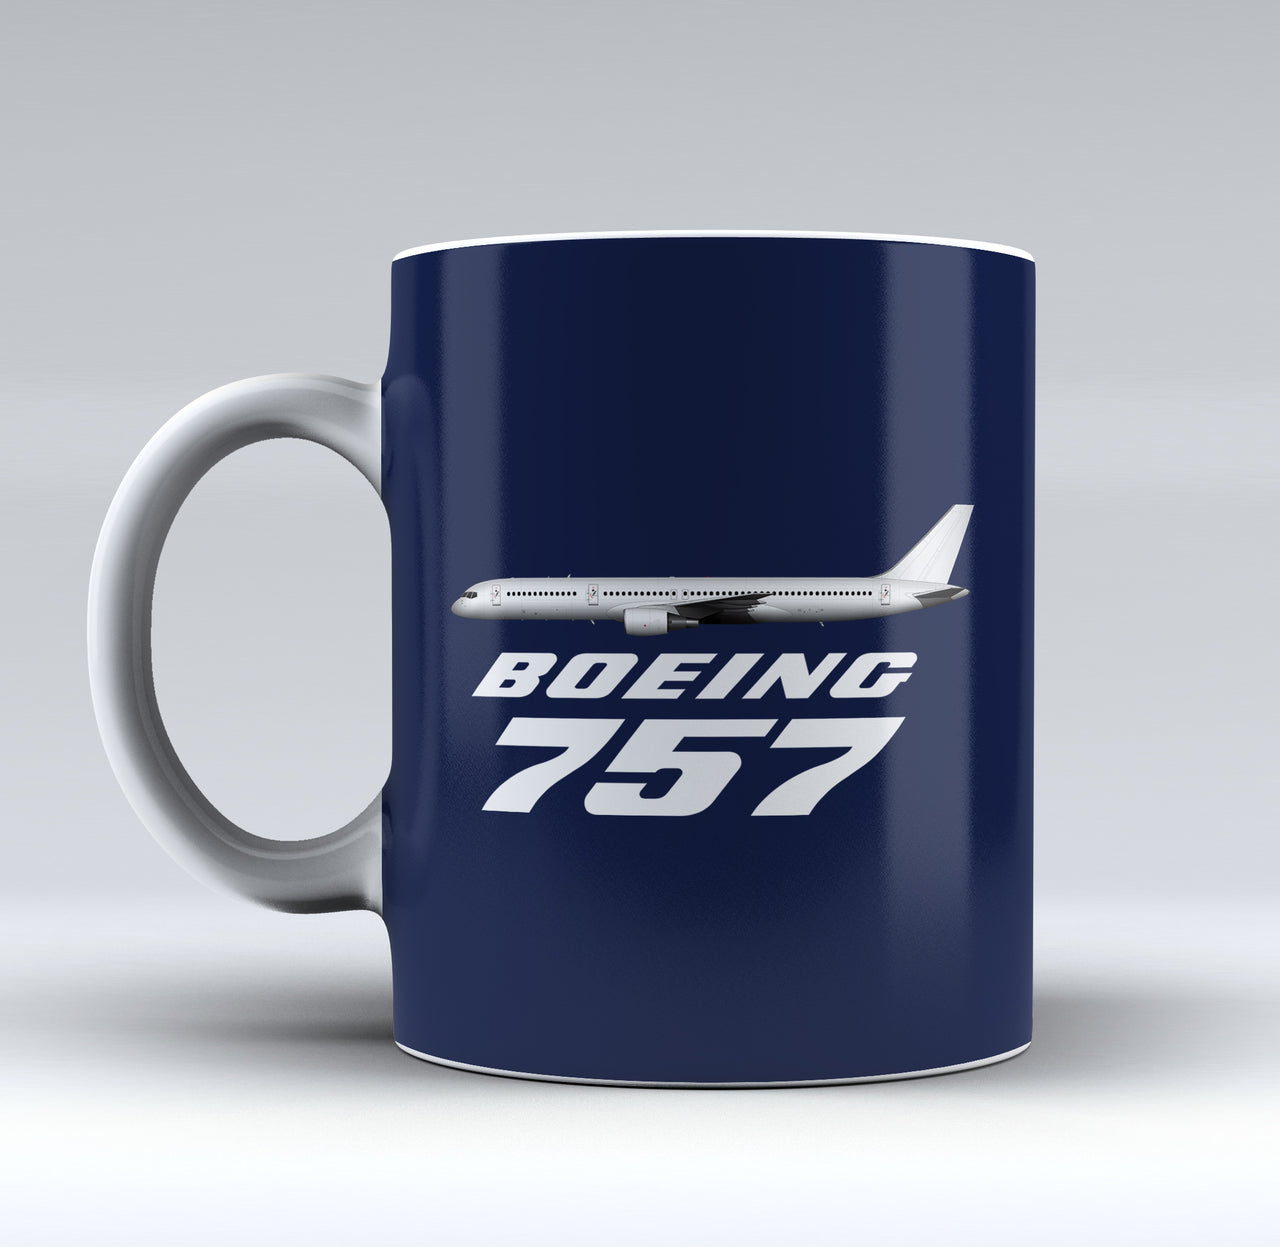 The Boeing 757 Designed Mugs